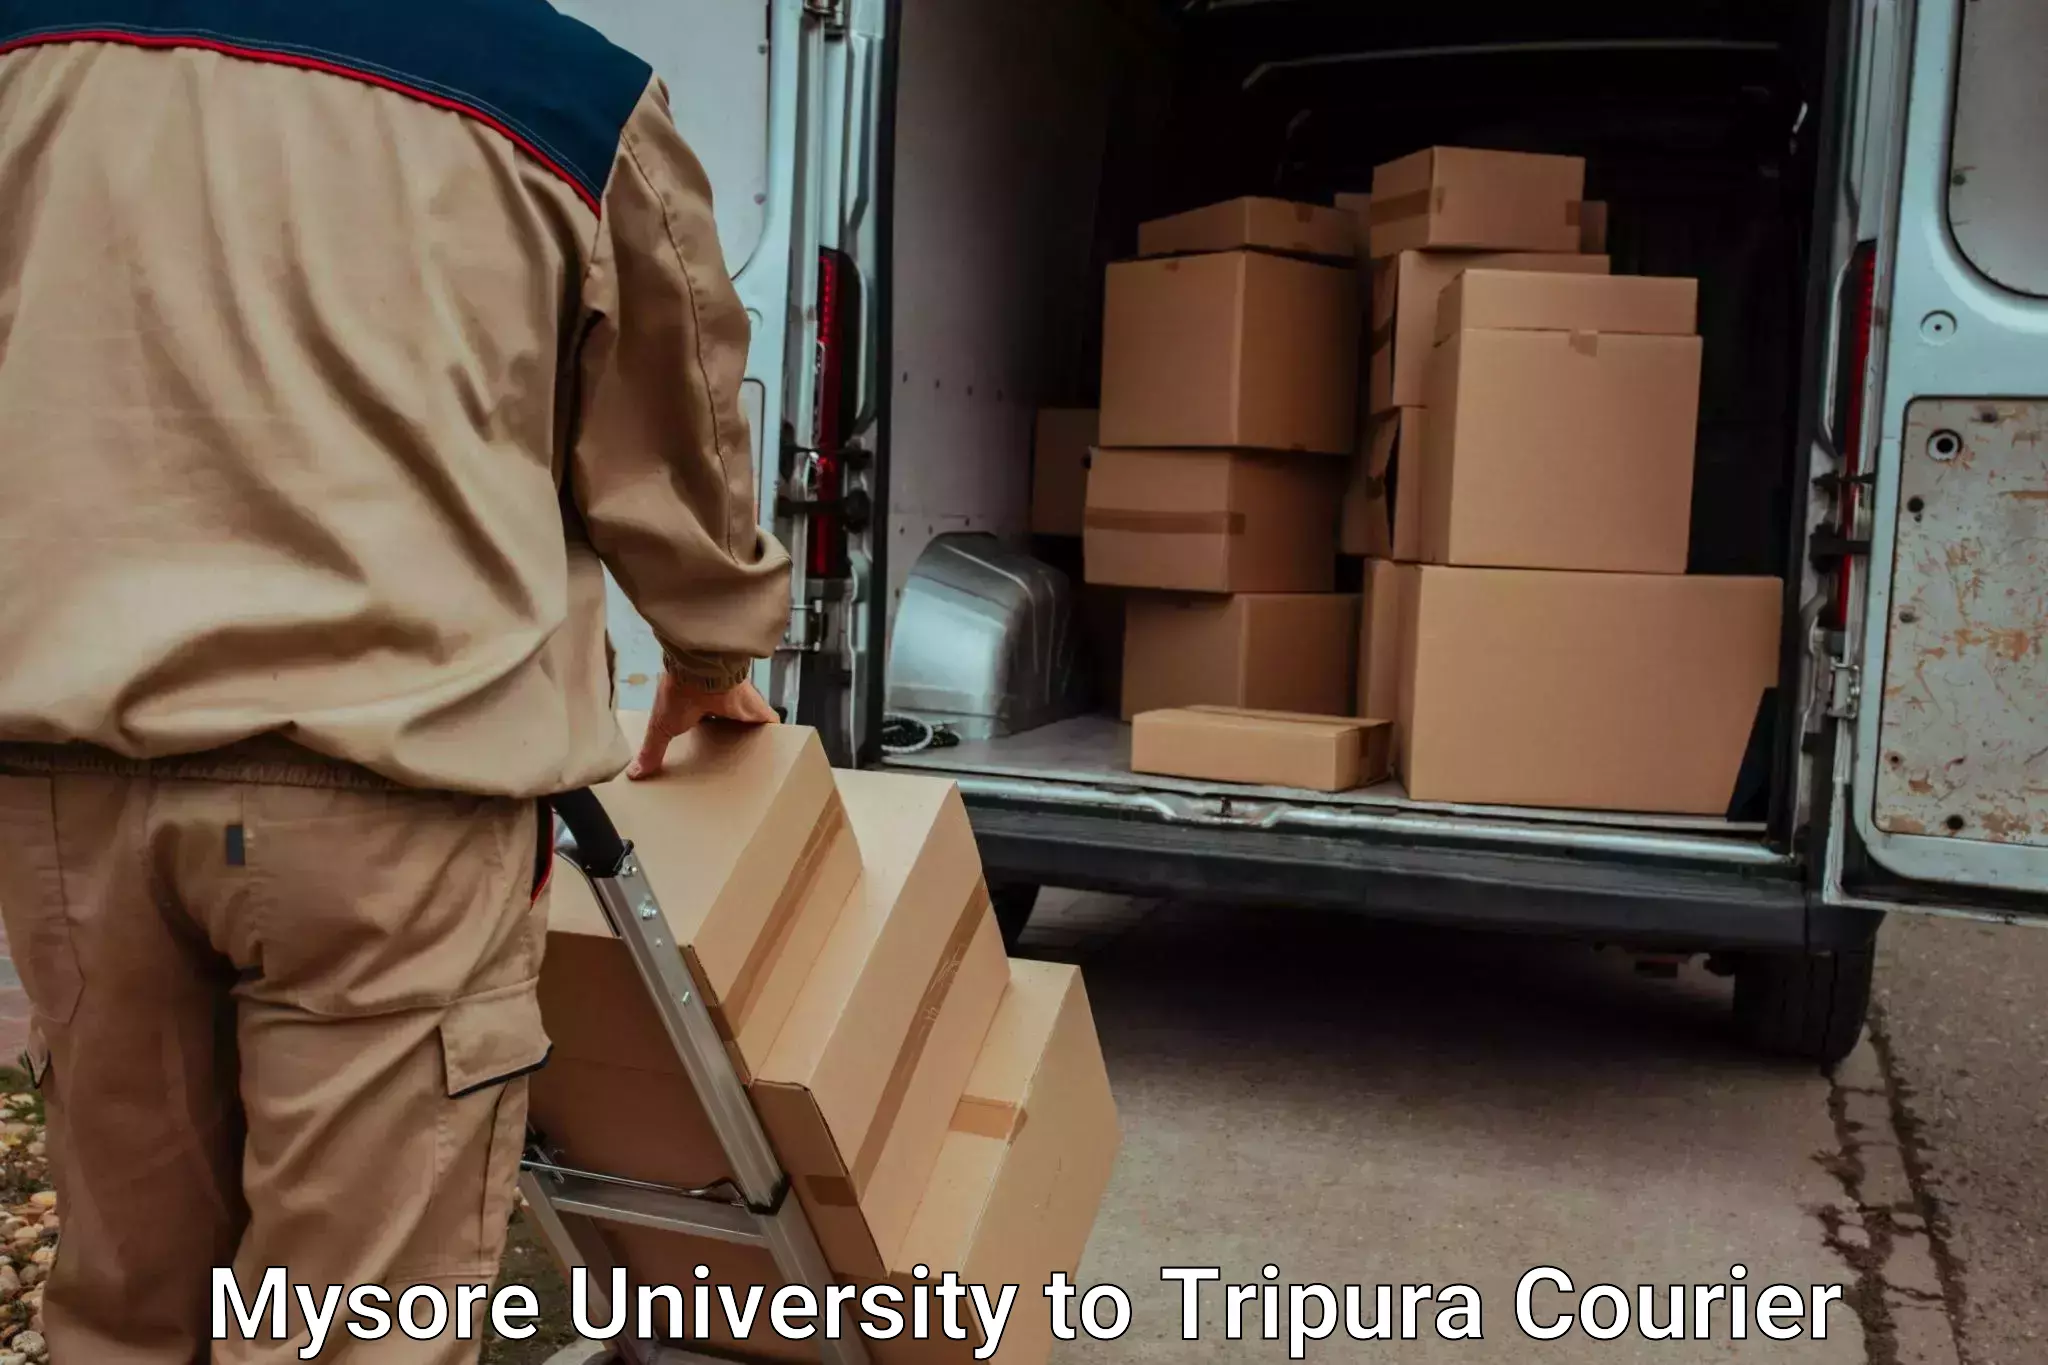 Same day luggage service Mysore University to Udaipur Tripura